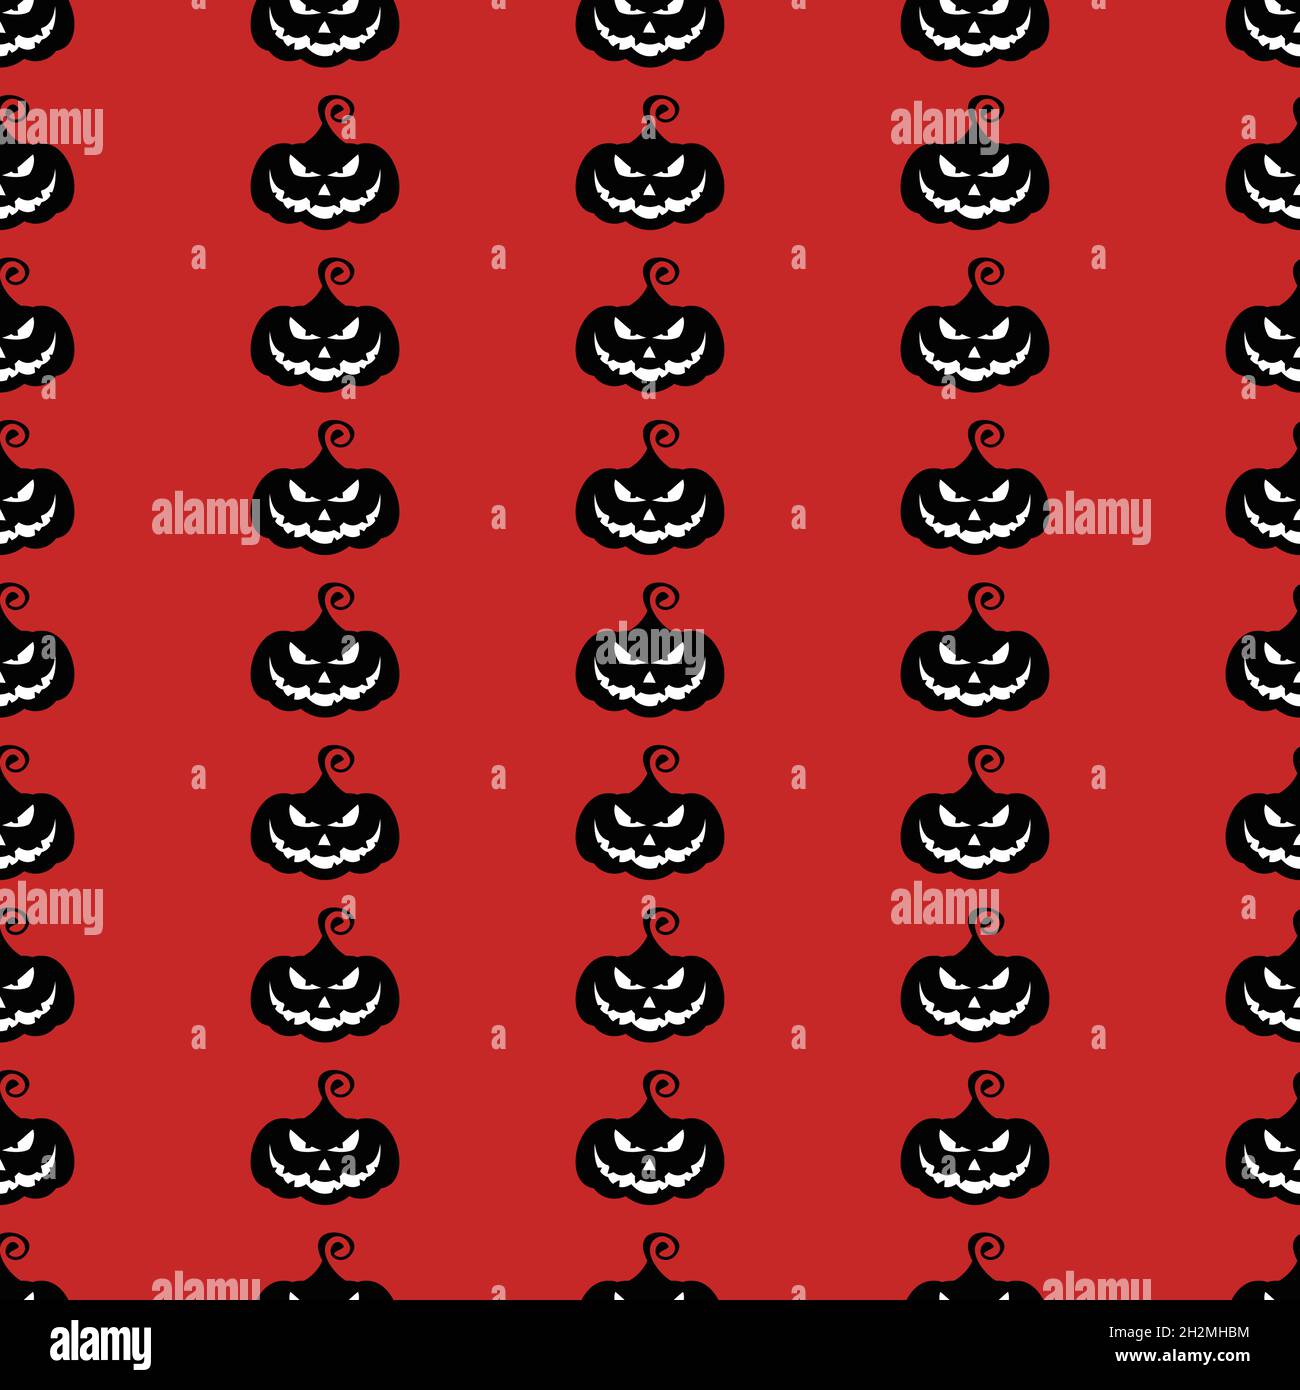 Seamless pattern with Halloween pumpkins. Stock Vector